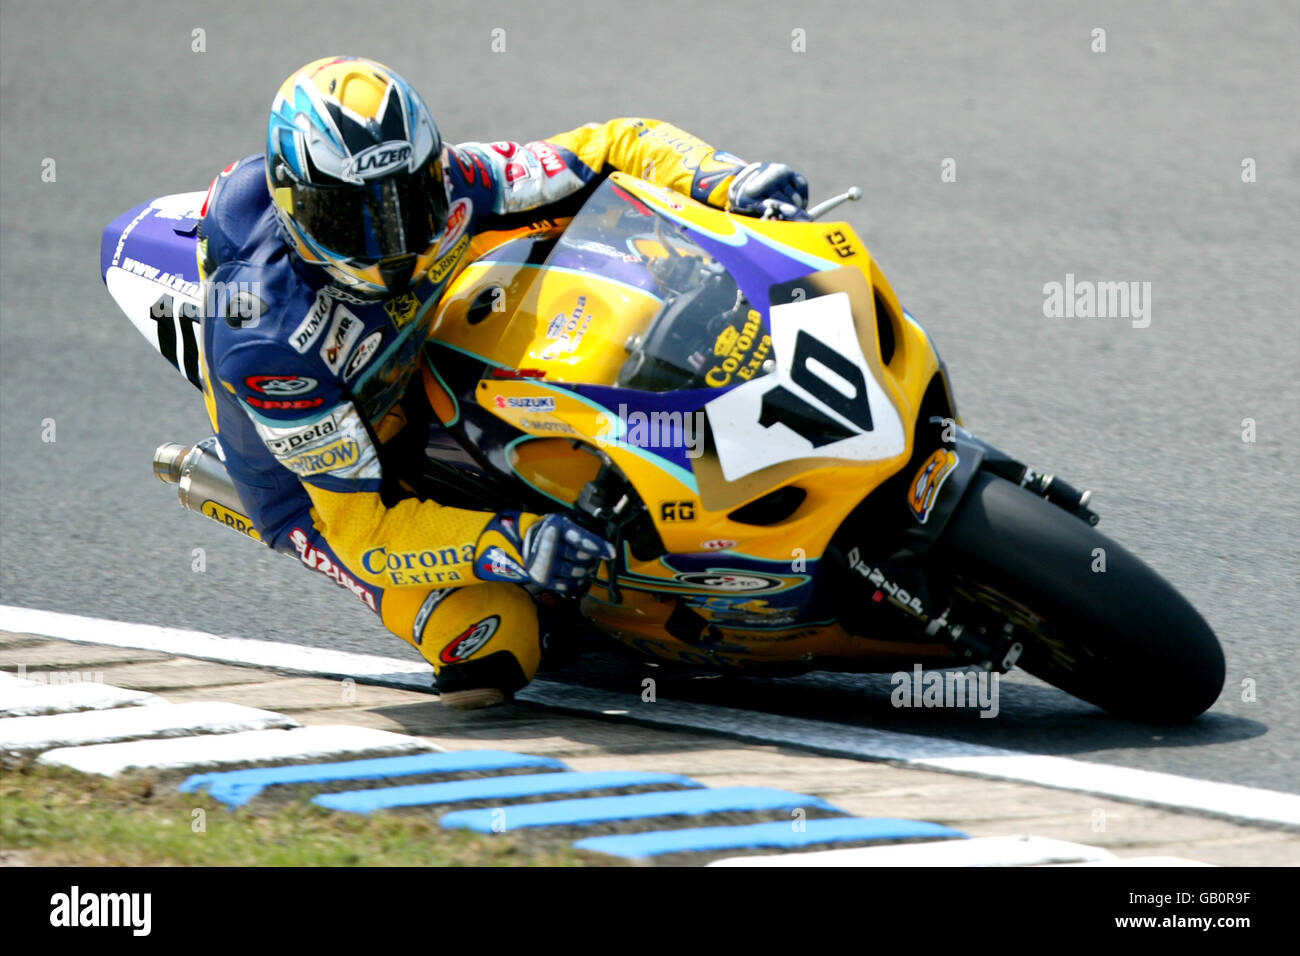 Motorcycling - British Superbike Championship - Silverstone. Gregorio Lavilla, Alstare Suzuki Stock Photo